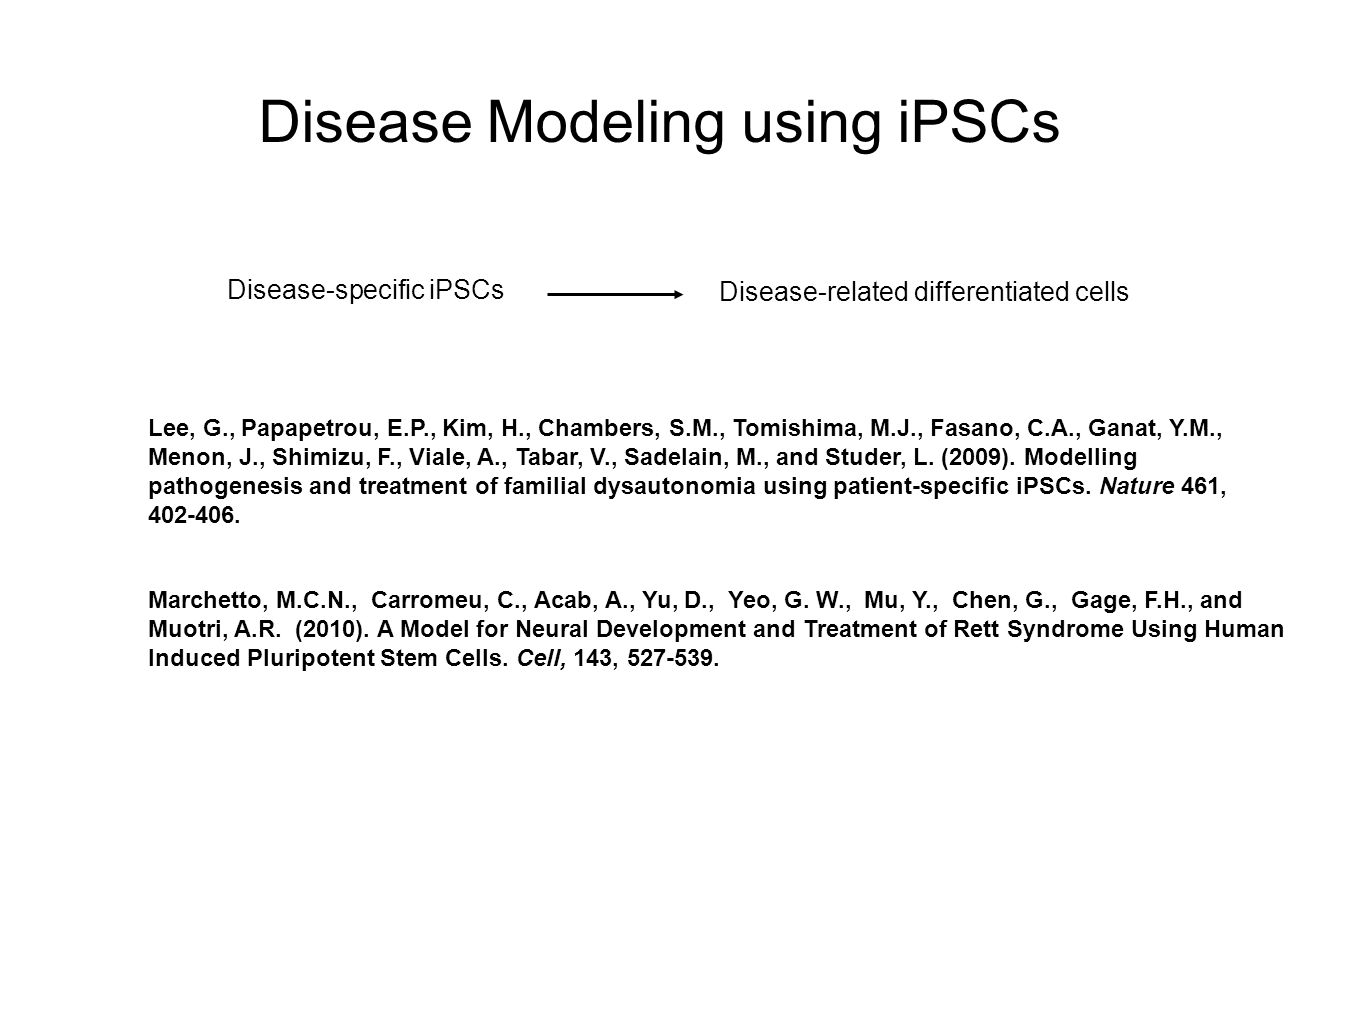 Disease Modeling using iPSCs Marchetto, M.C.N., Carromeu, C., Acab, A., Yu, D., Yeo, G.